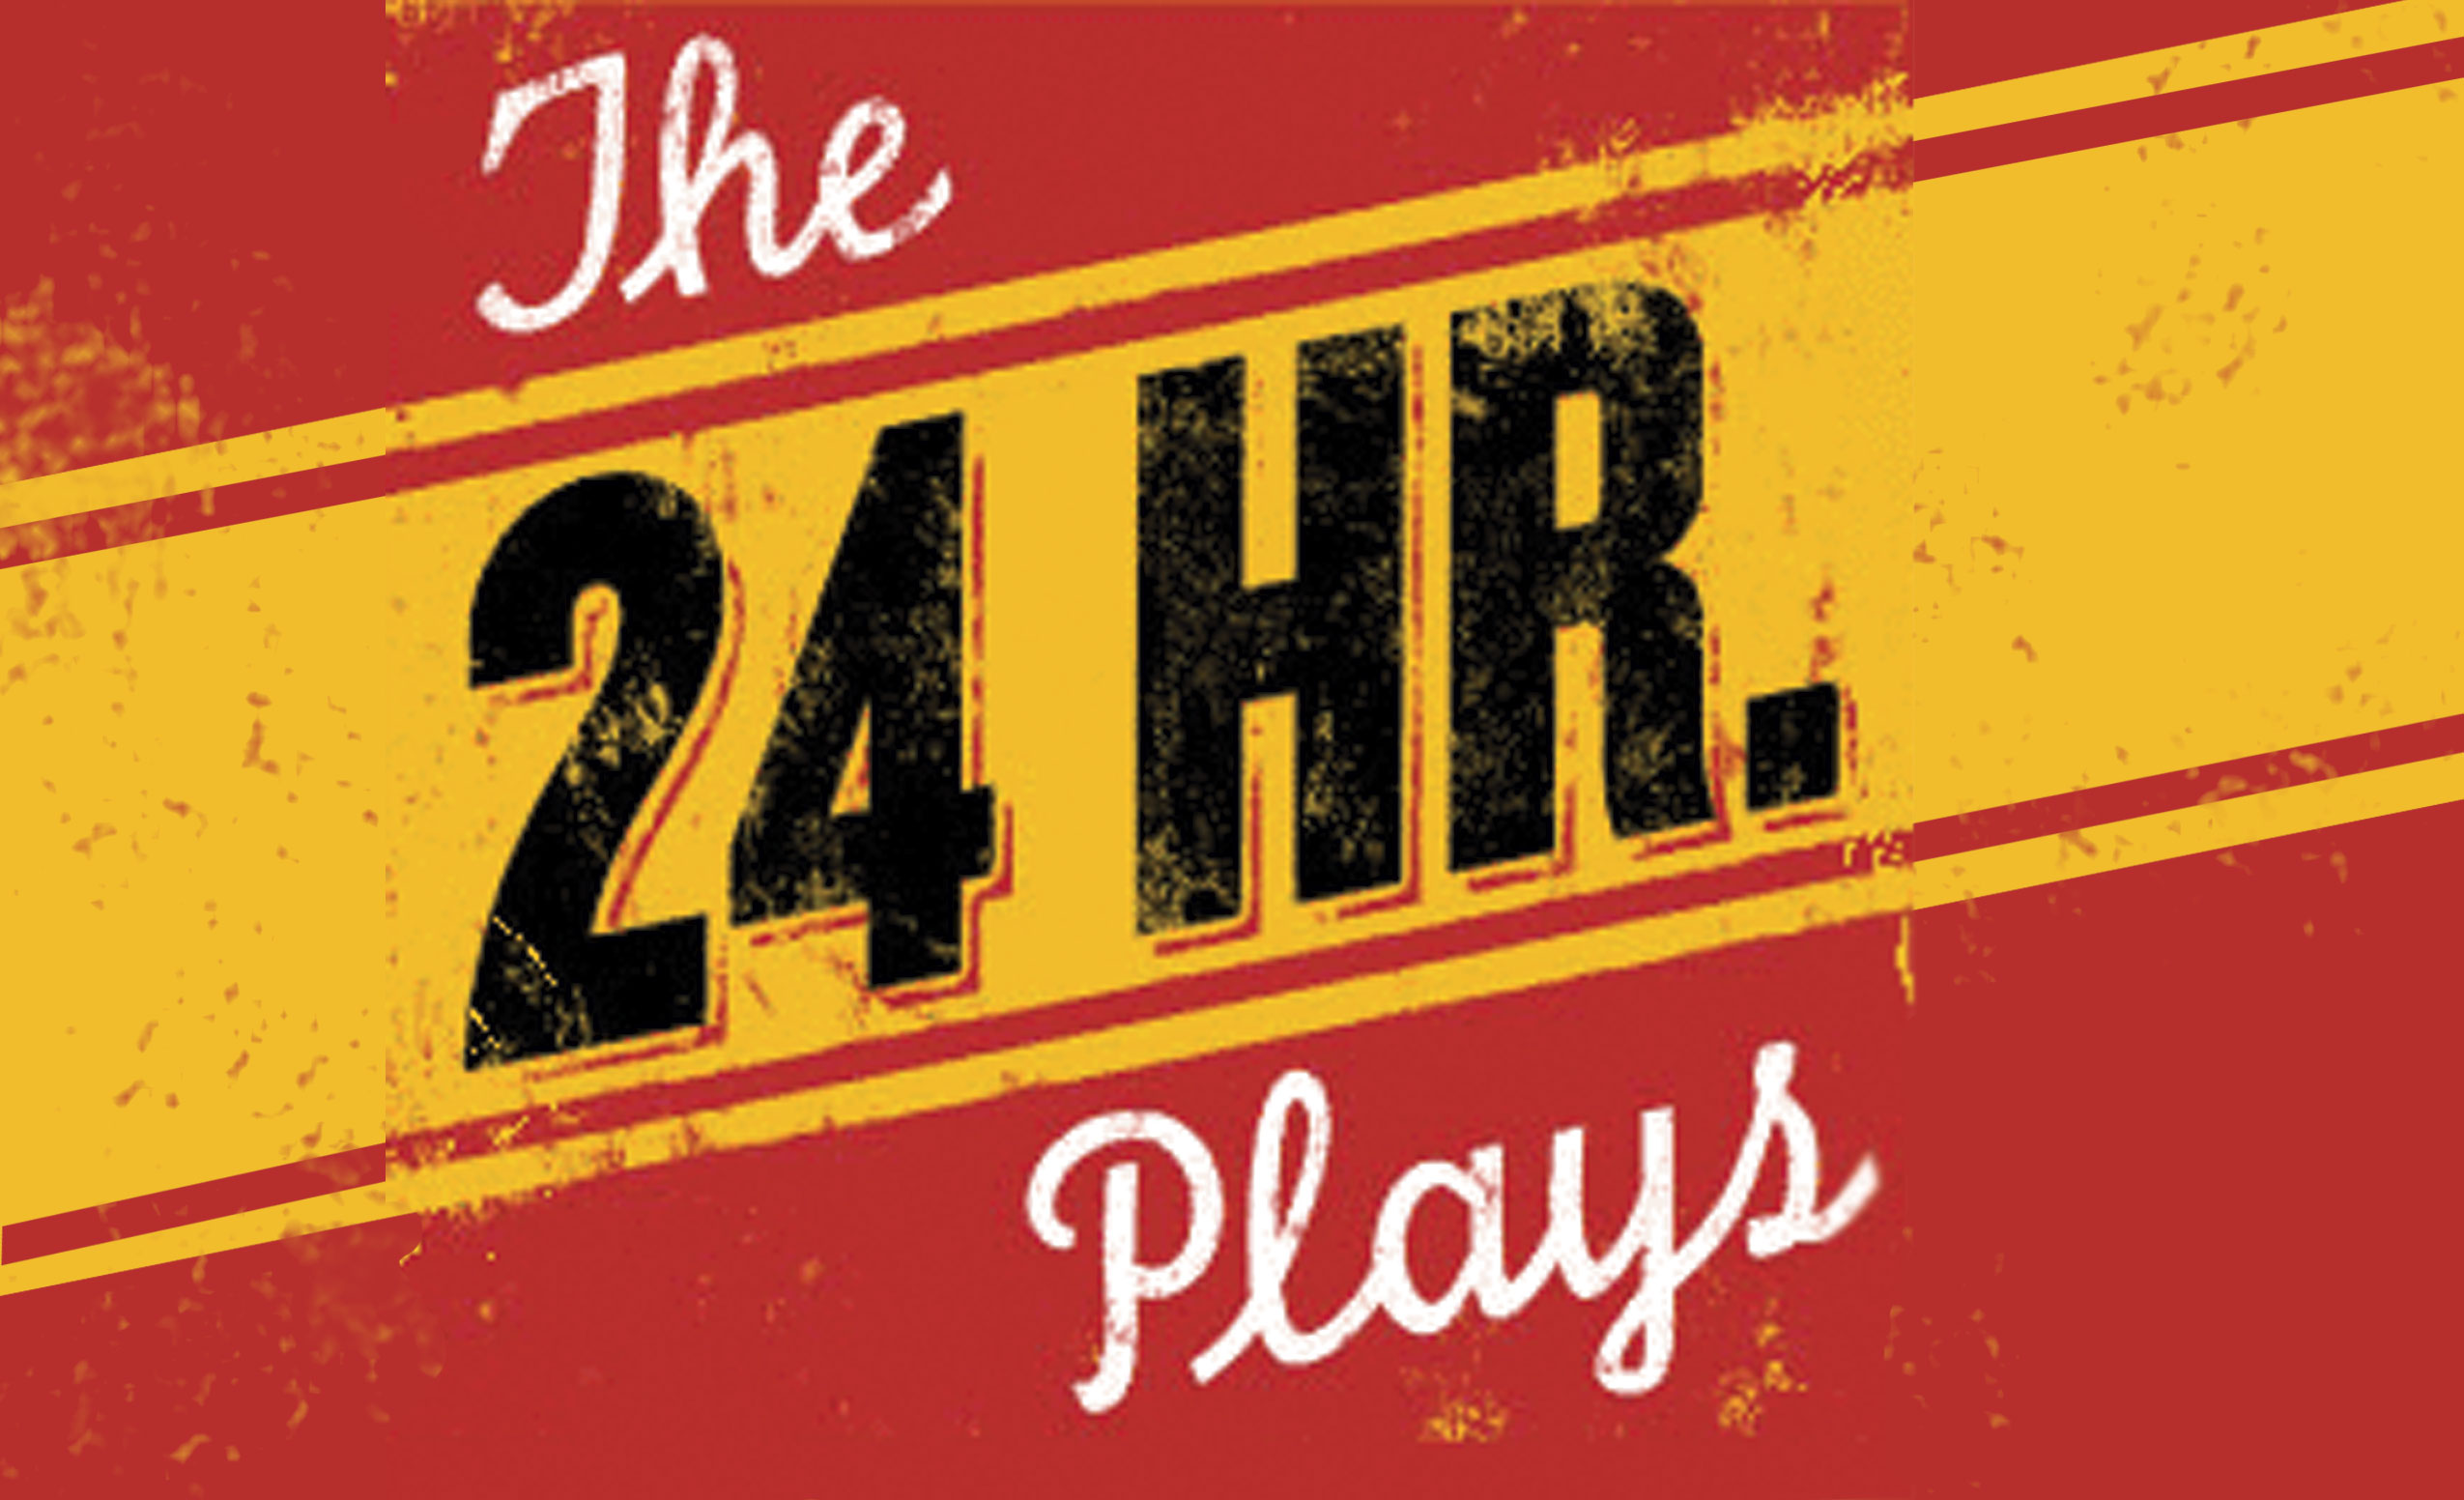 The 24 Hour Plays Festival, January 27-28, 2017